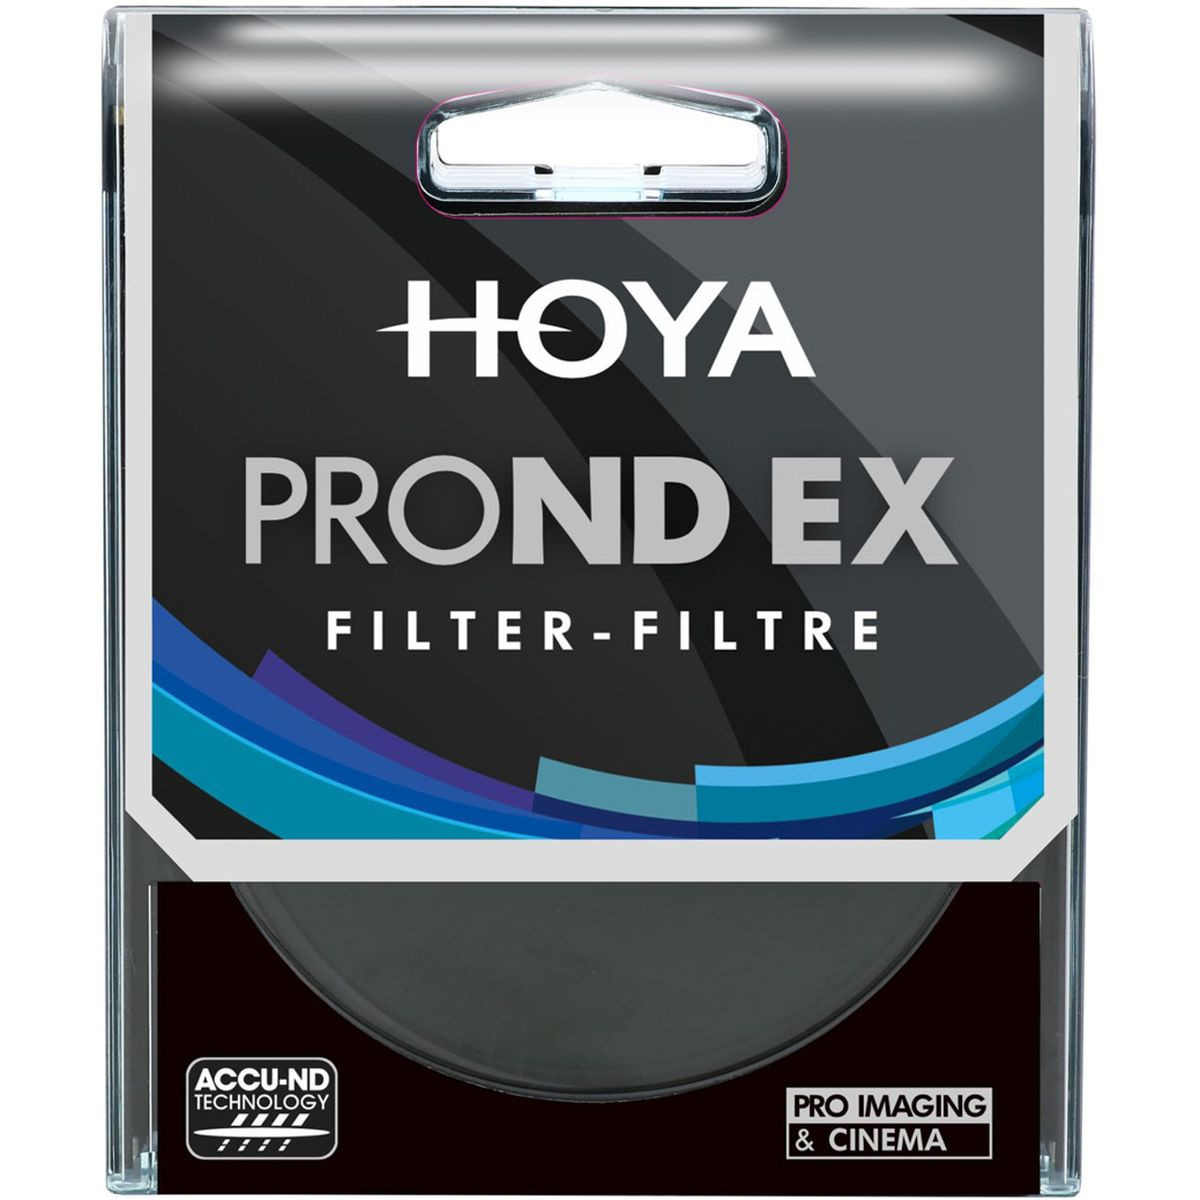 Hoya 67.0MM PROND EX 1000